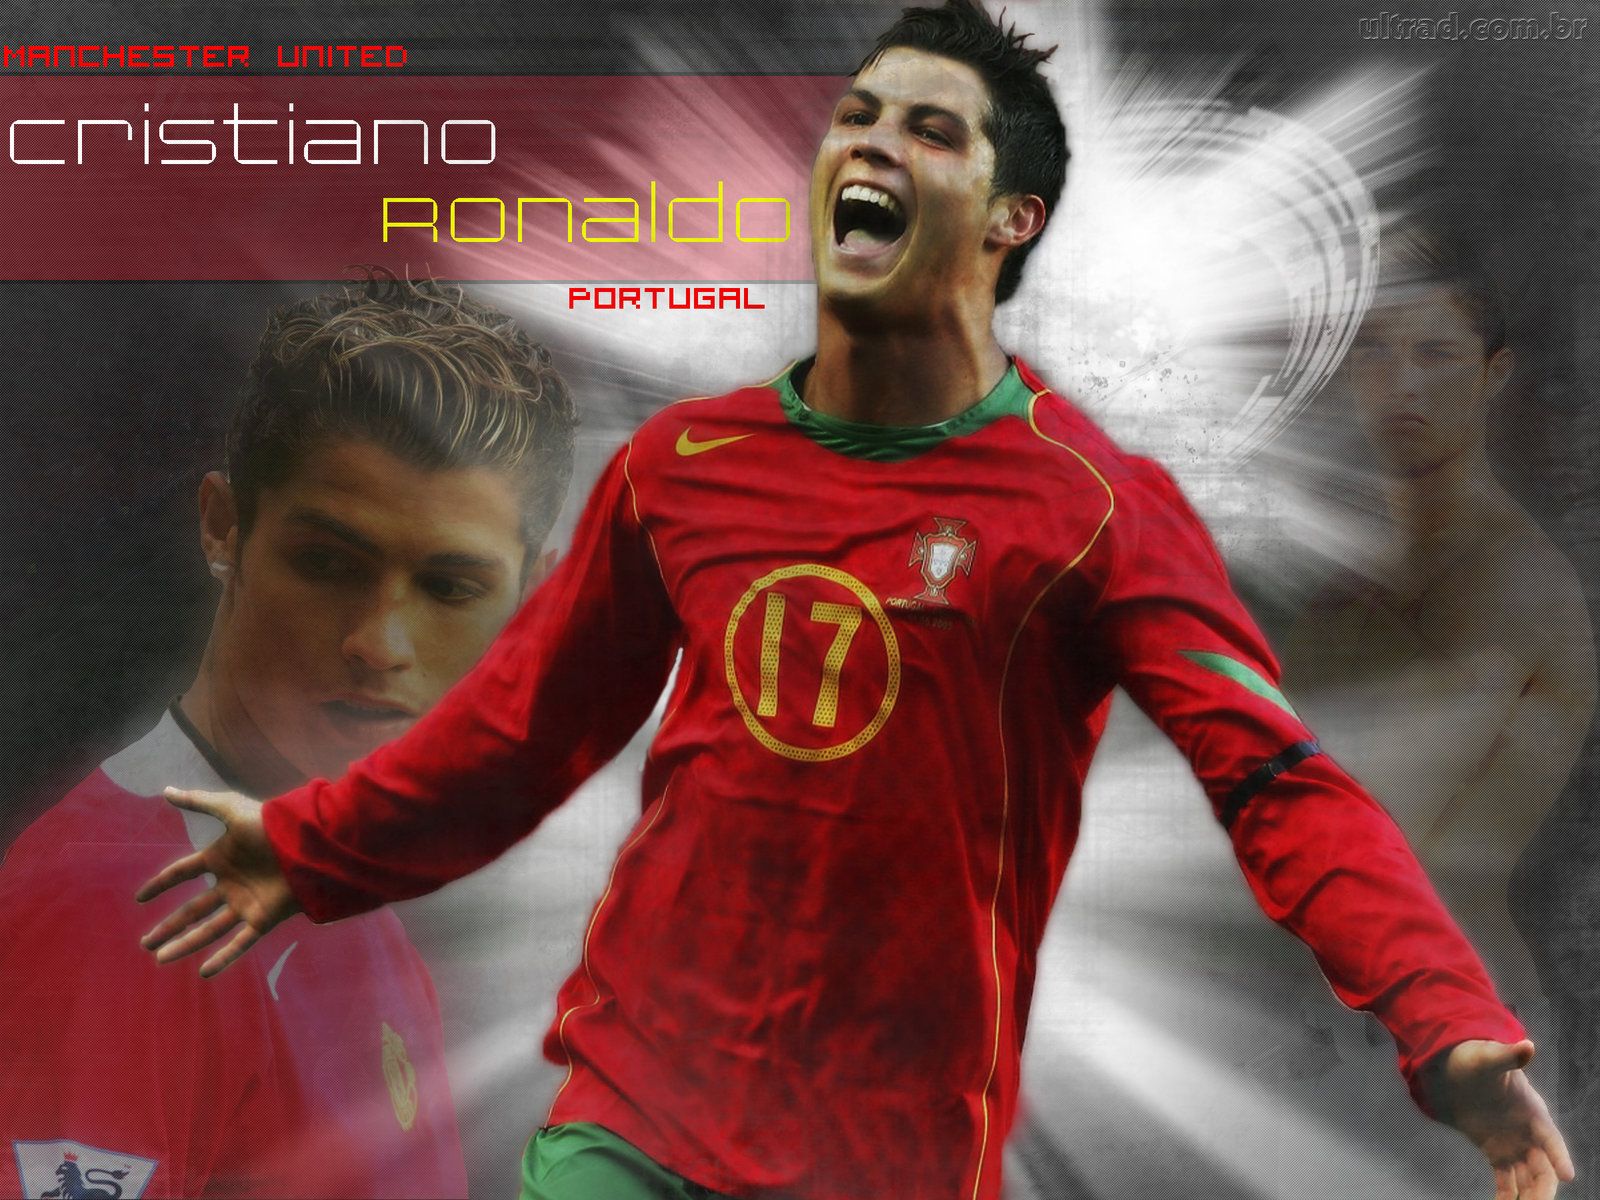 https://blogger.googleusercontent.com/img/b/R29vZ2xl/AVvXsEjNG2c6IpeXIgK3zQK5hJGuRfplXtK2N8y5wG5acj6JsfDPEn3BKqKoaLfWxXcUaUH8vOVqvHWrHbx1ze8apSVeA0OQ39eYrfCZ8L3PiaY11Detal2TsGqO2JvTjYuth3qaNNw5LPj4NwU/s1600/wallpaper+-+Cristiano+Ronaldo1.jpg